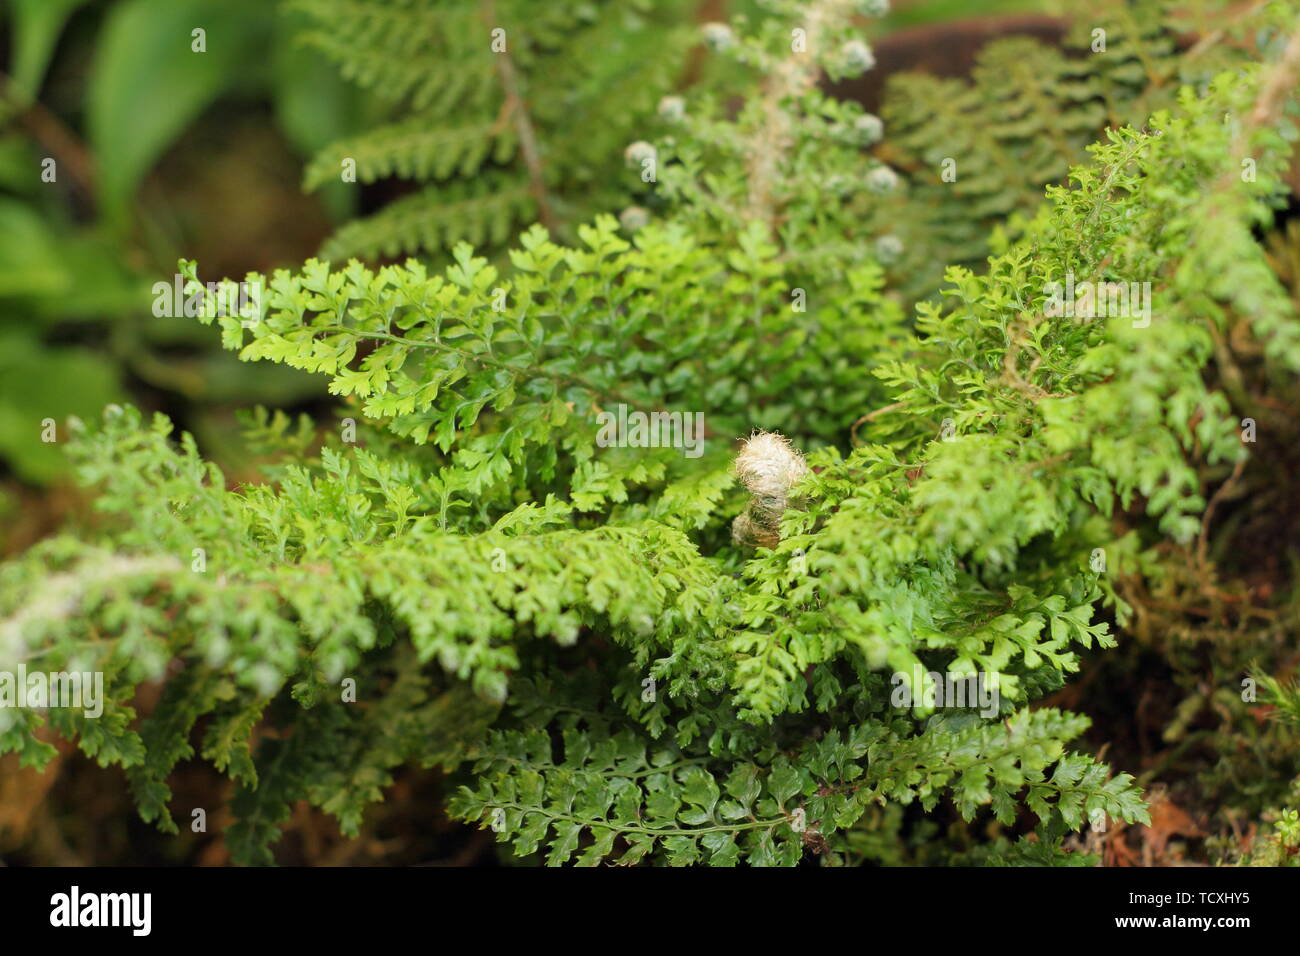 Polystichum Setiferum Plumosomultilobum. Soft, bushy fronds of Plumosomultilobum Group’ fern Stock Photo